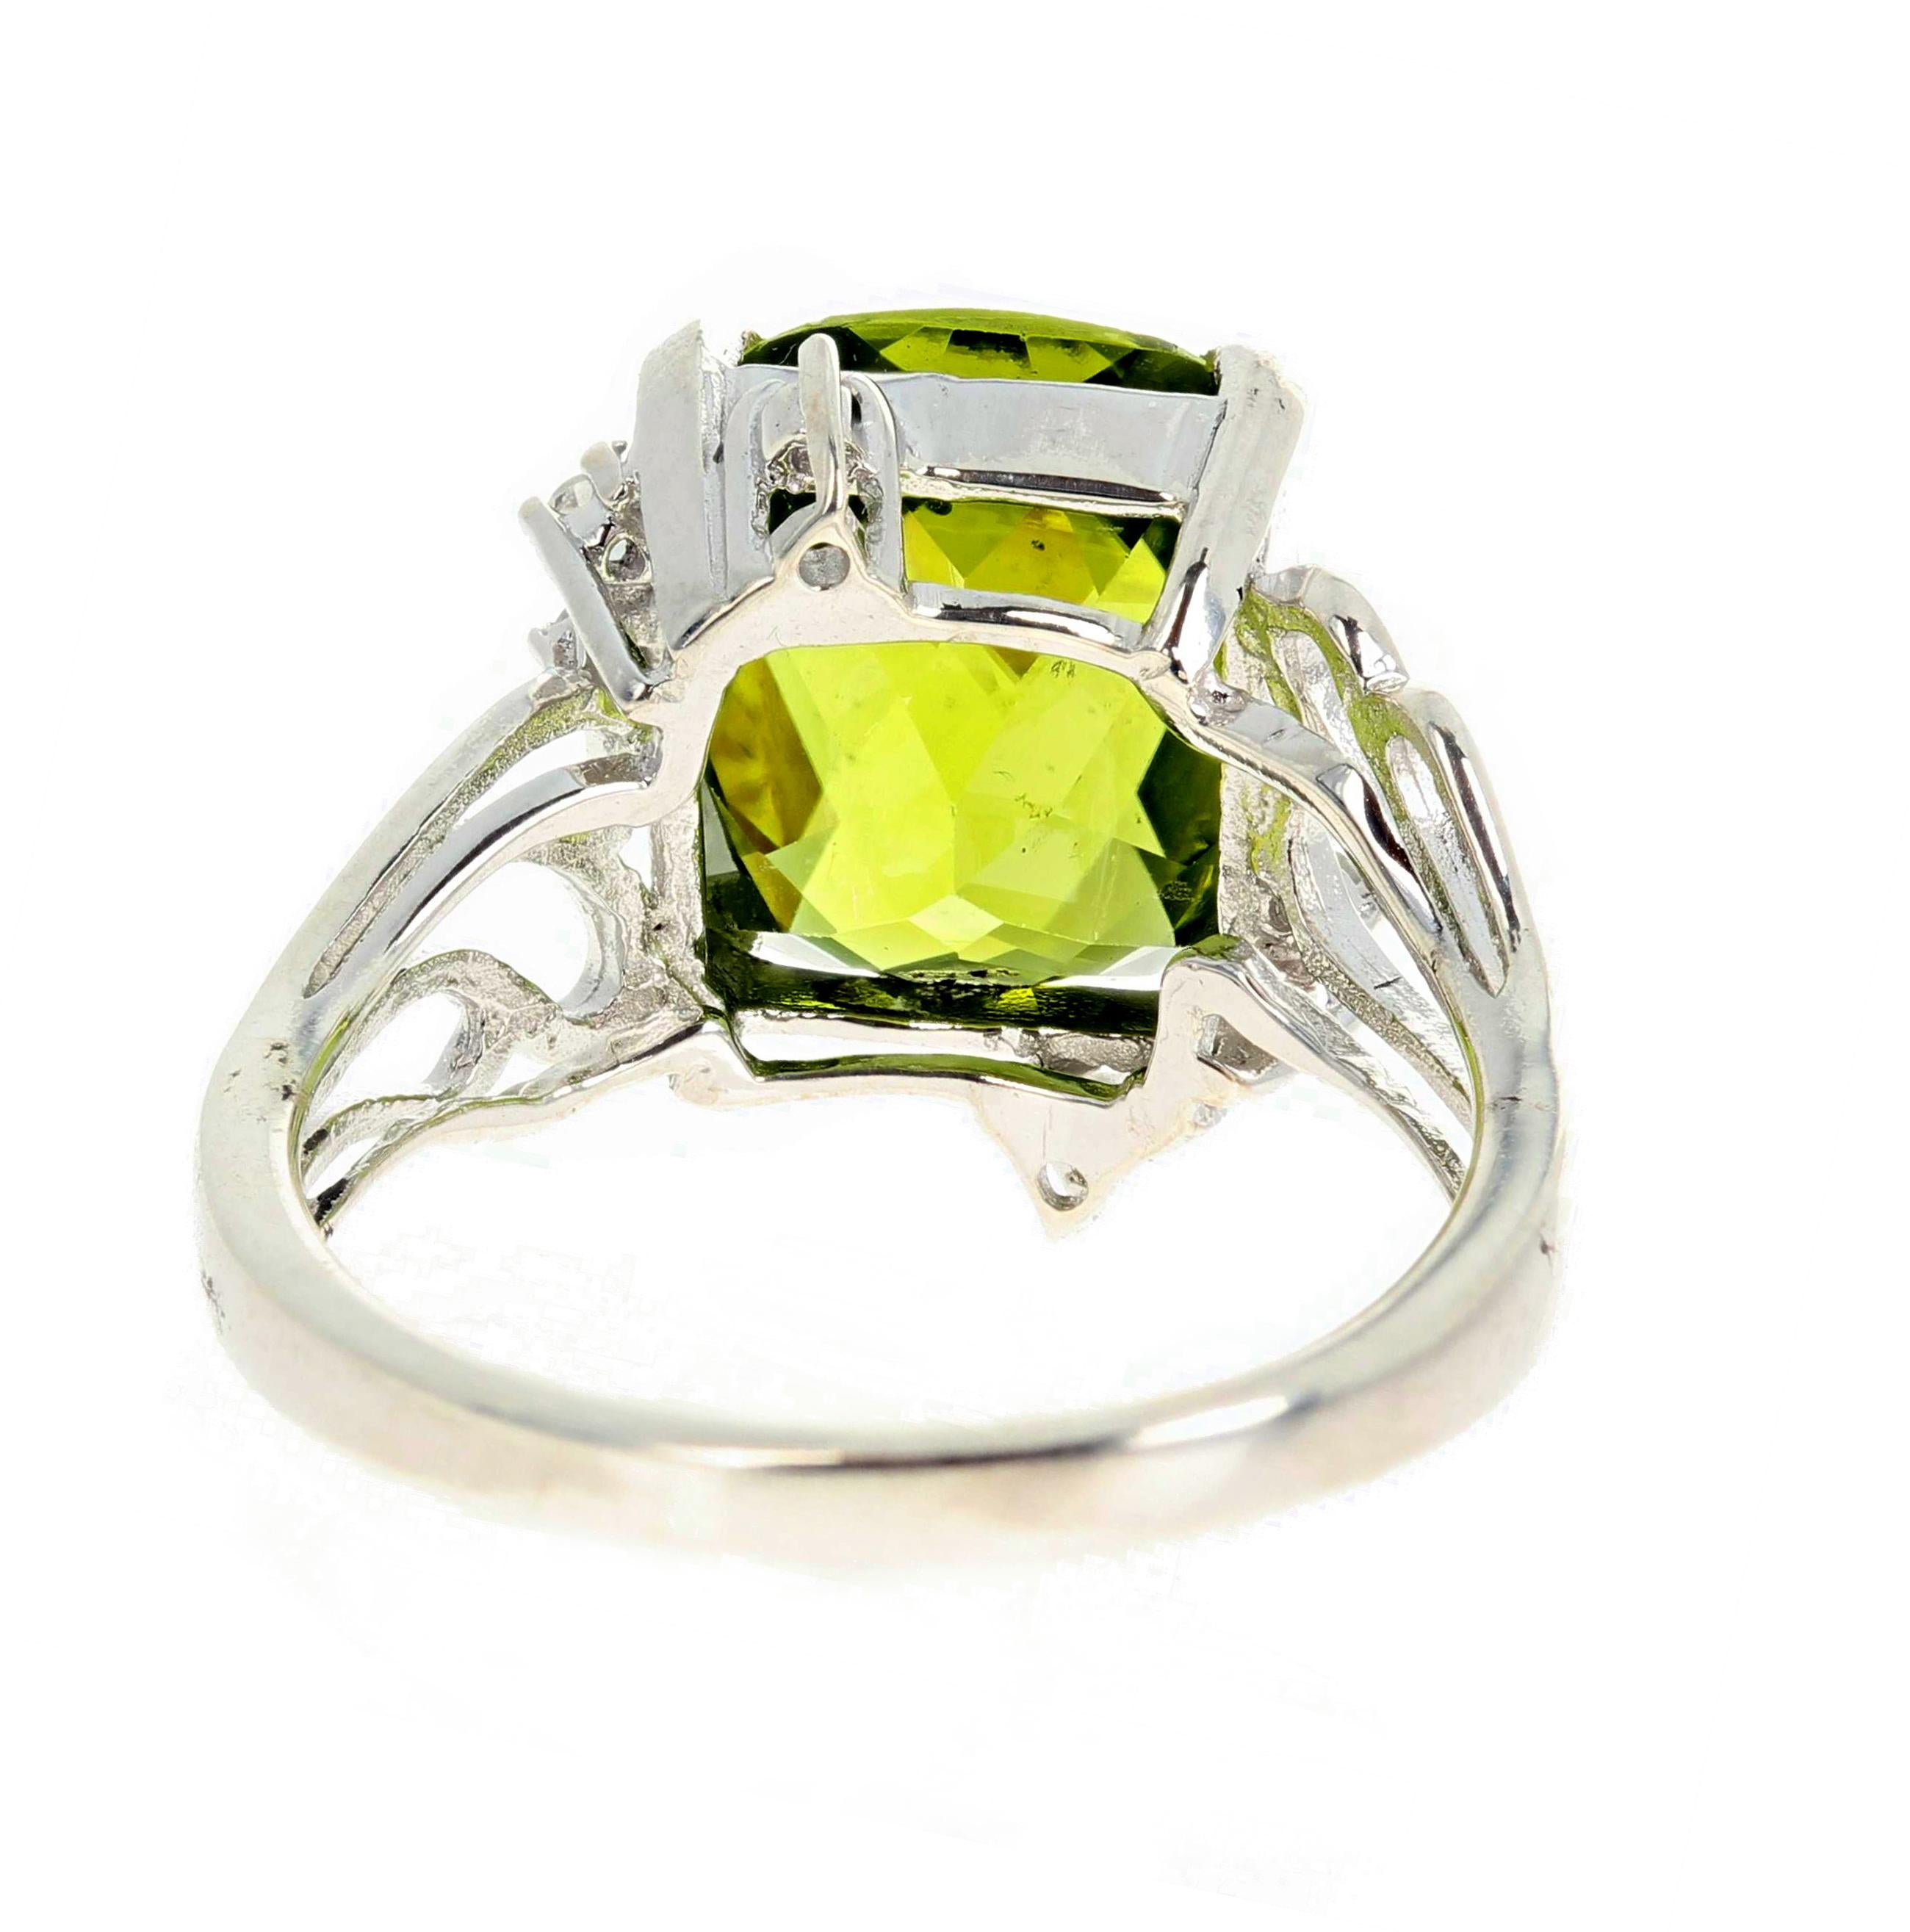 Mixed Cut AJD Brilliant Rare Natural Green 7.8 Ct Sri Lanka Zircon & Diamond Ring For Sale